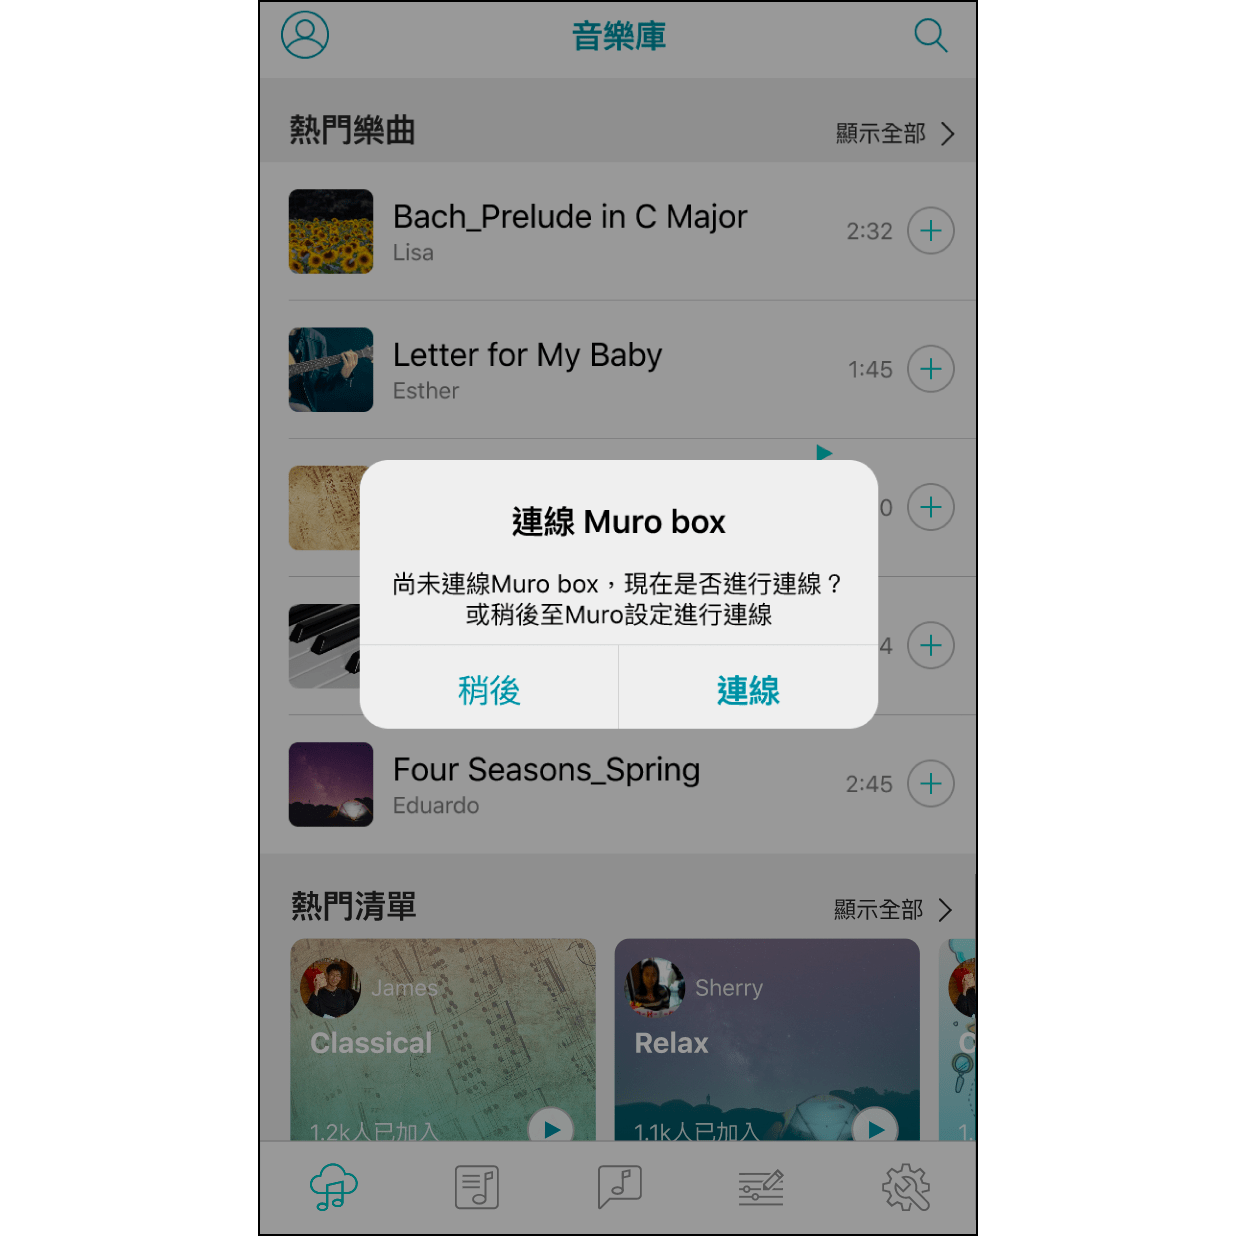 5. Muro Box 連線視窗進入 app 後會跳出連線視窗，如欲連線請按照畫面指示操作。（如不需連線則選擇稍後)。